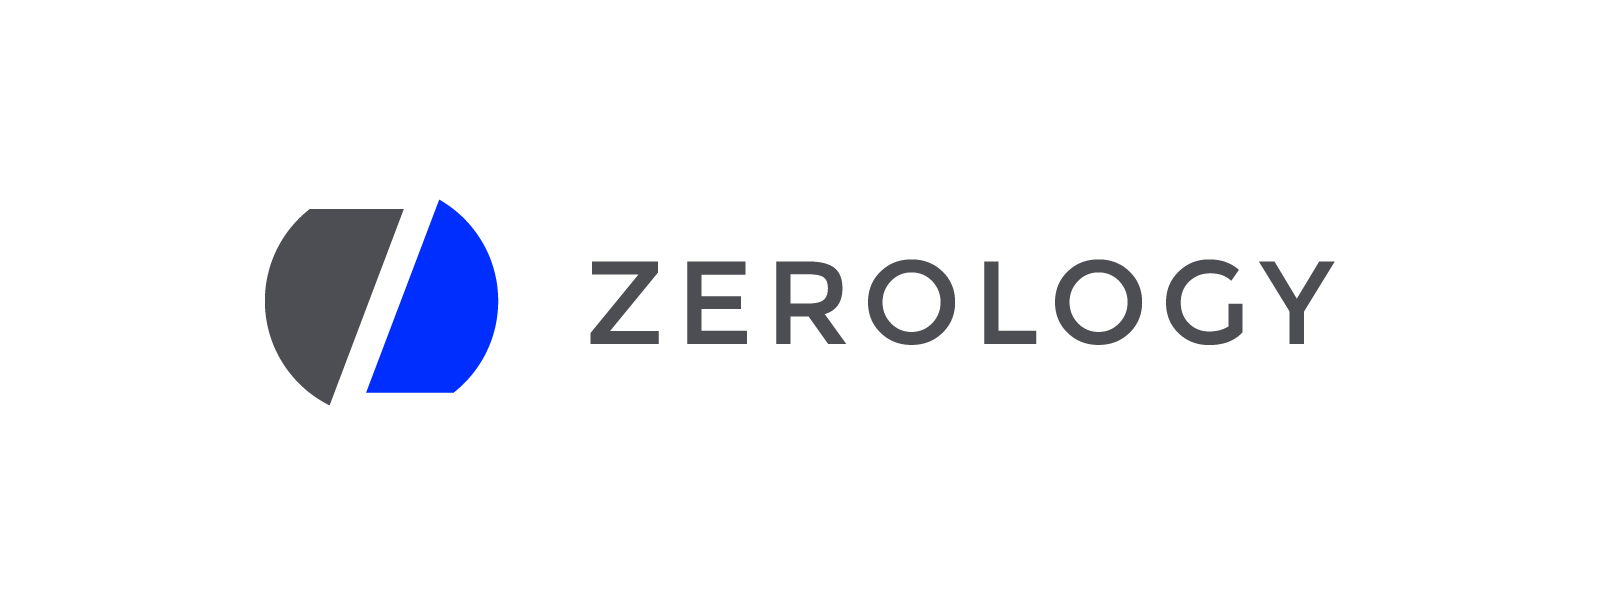 Zerology logo